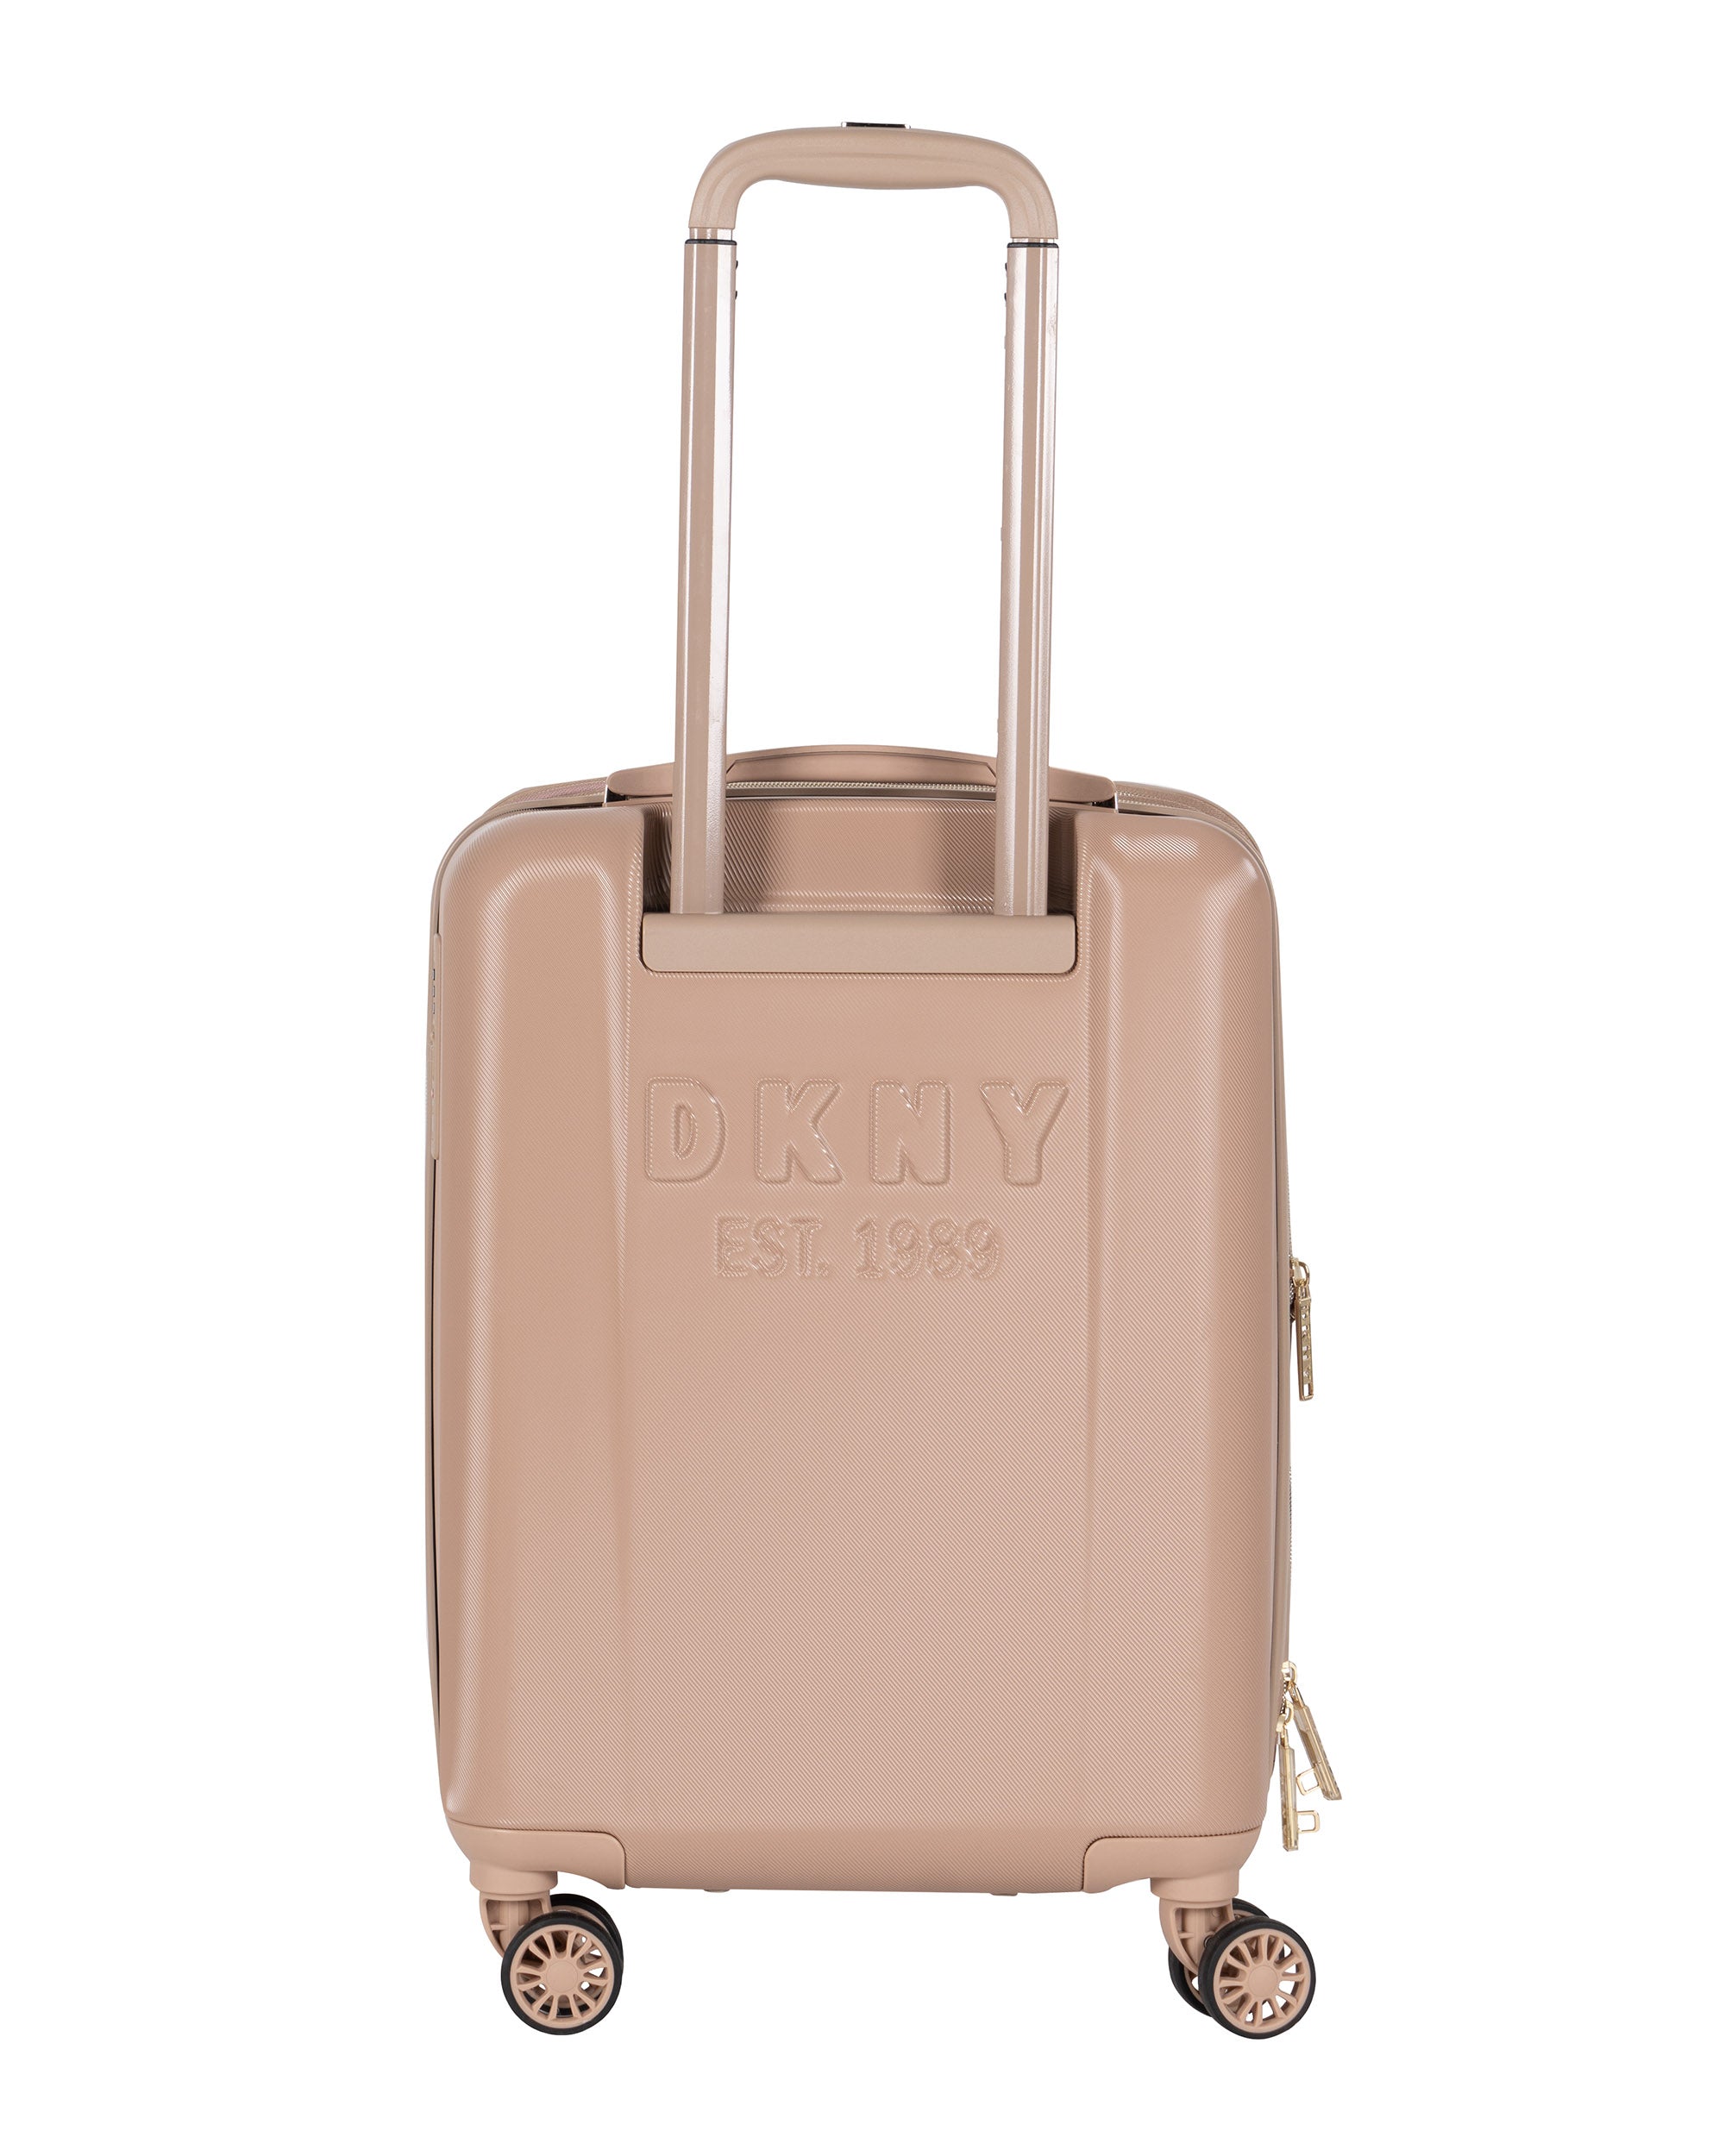 DKNY Beige Cabin Luggage